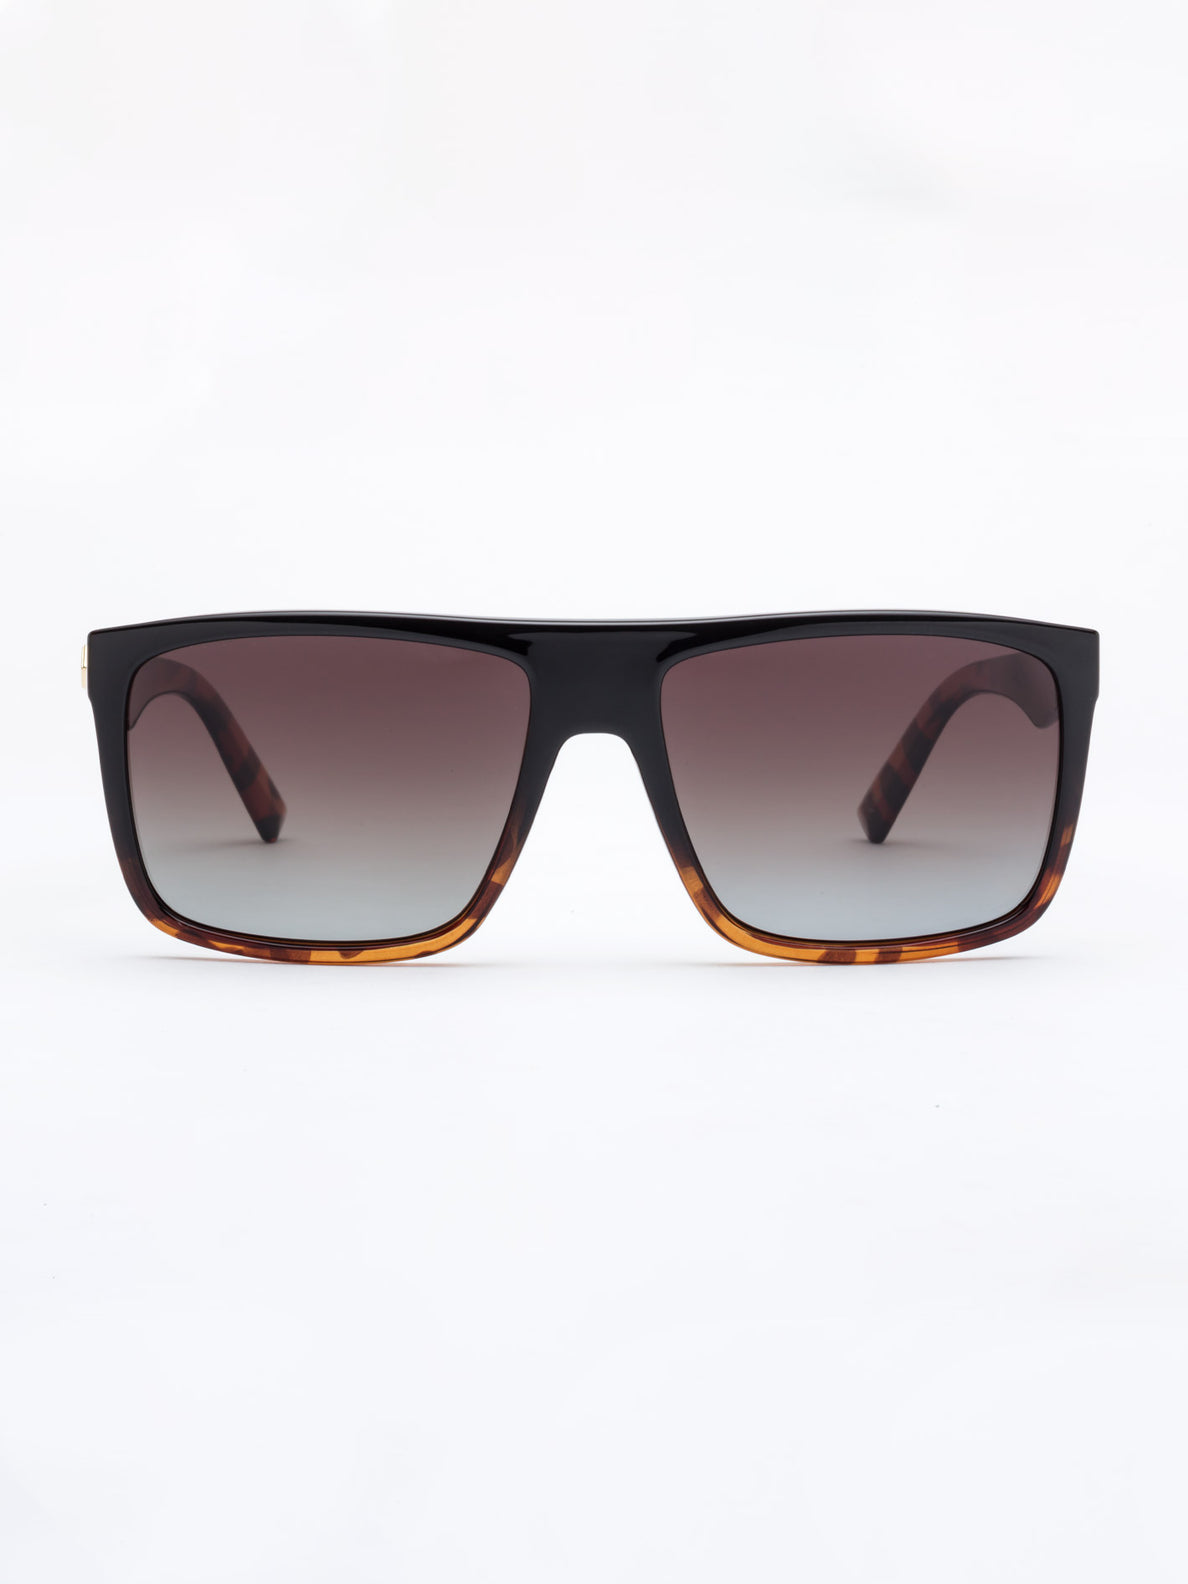 Franken Sunglasses - Gloss Darkside / Bronze Faded Polar